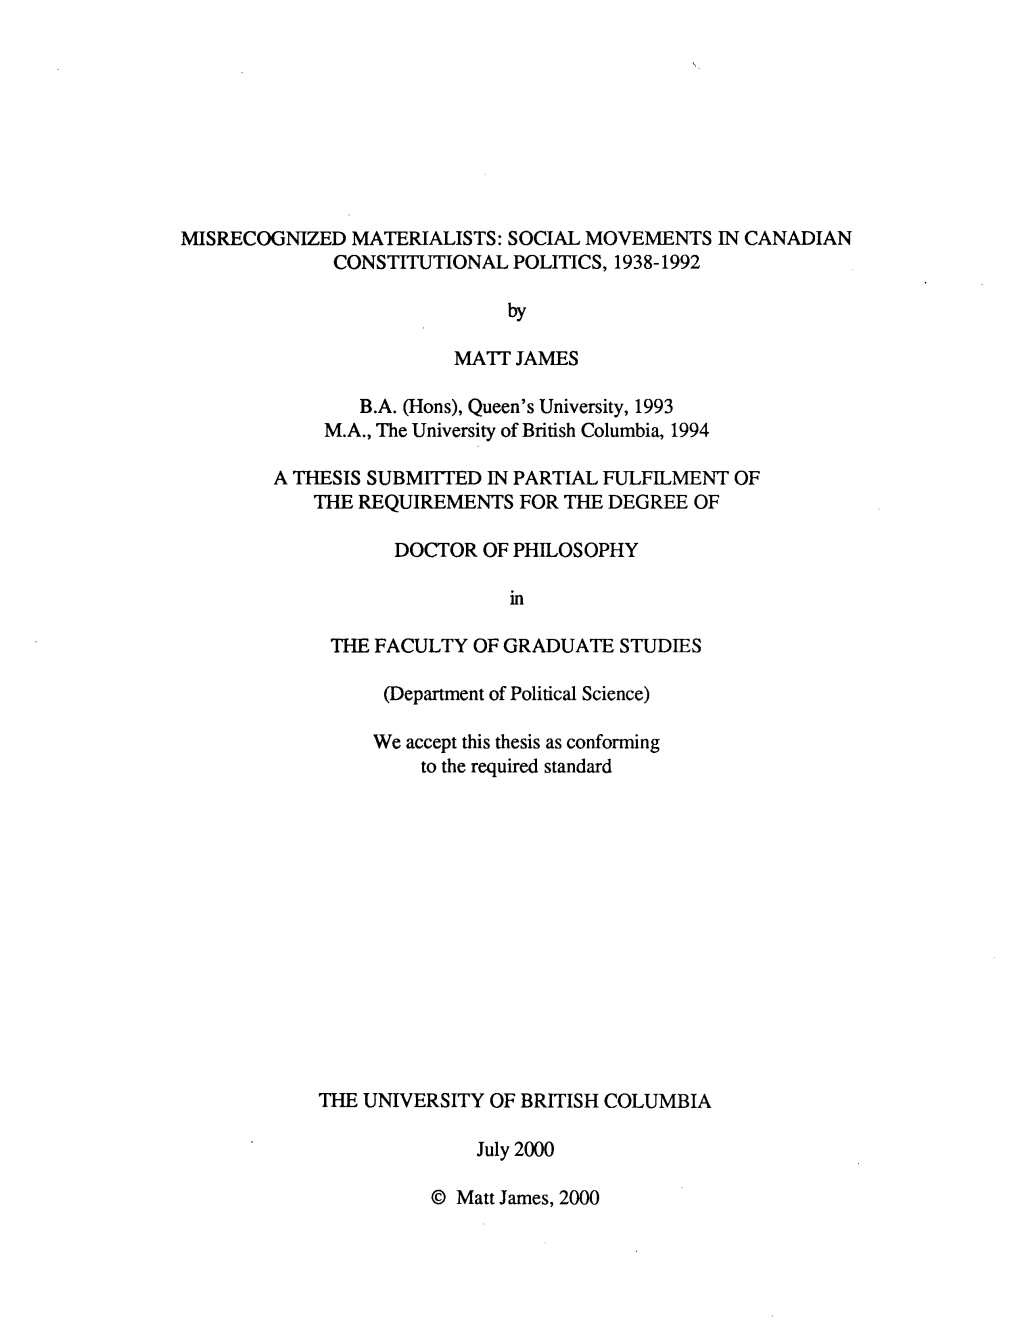 Social Movements Ln Canadian Constitutional Politics, 1938-1992